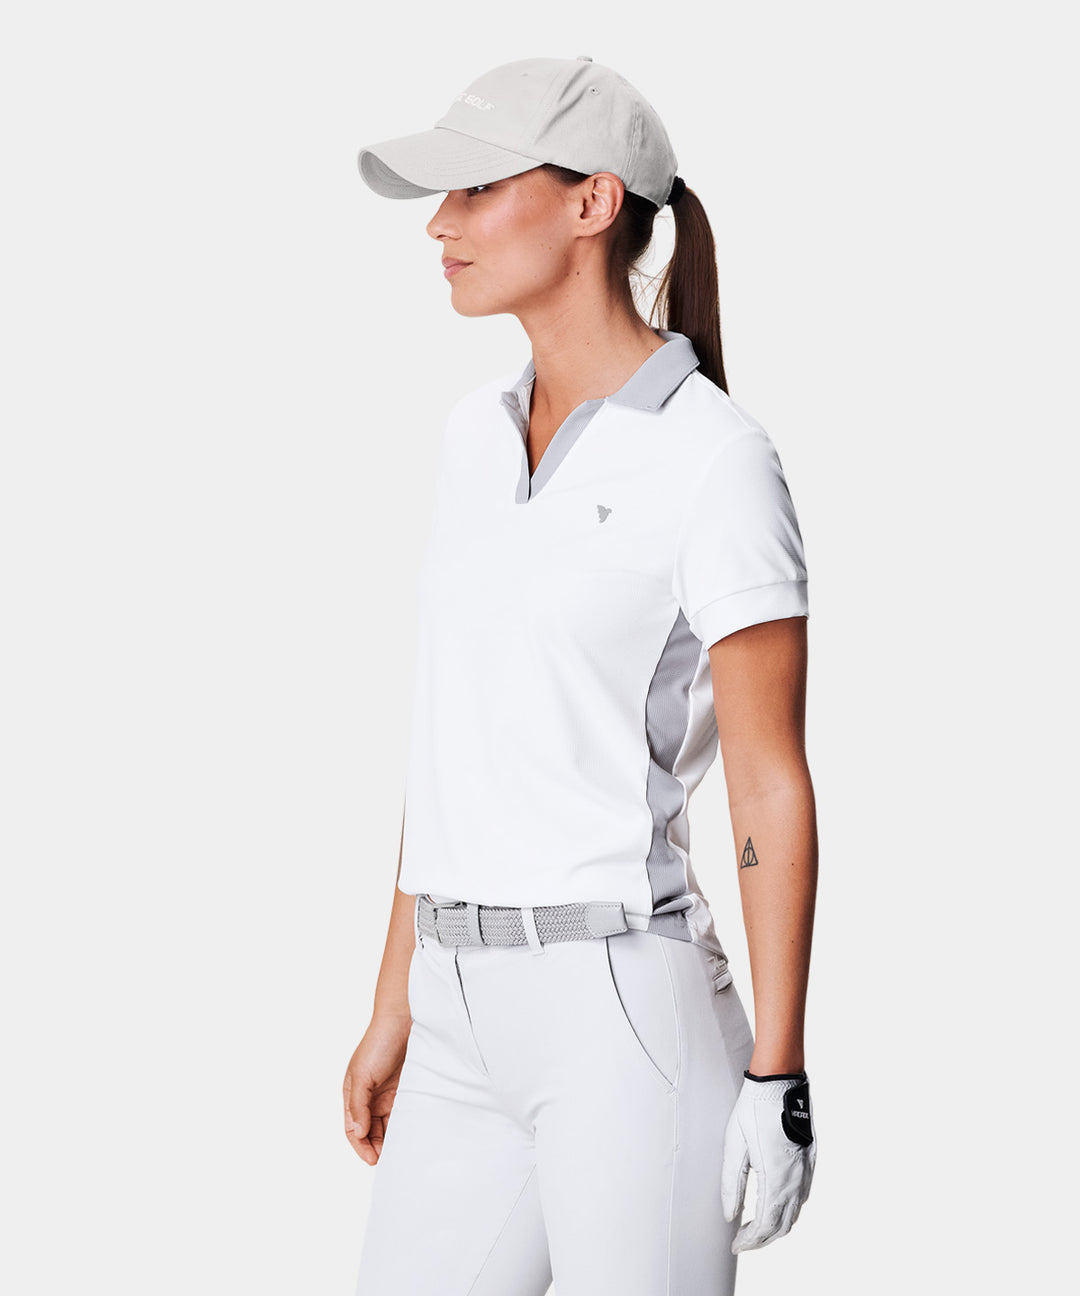 Tori White Polo Shirt Macade Golf